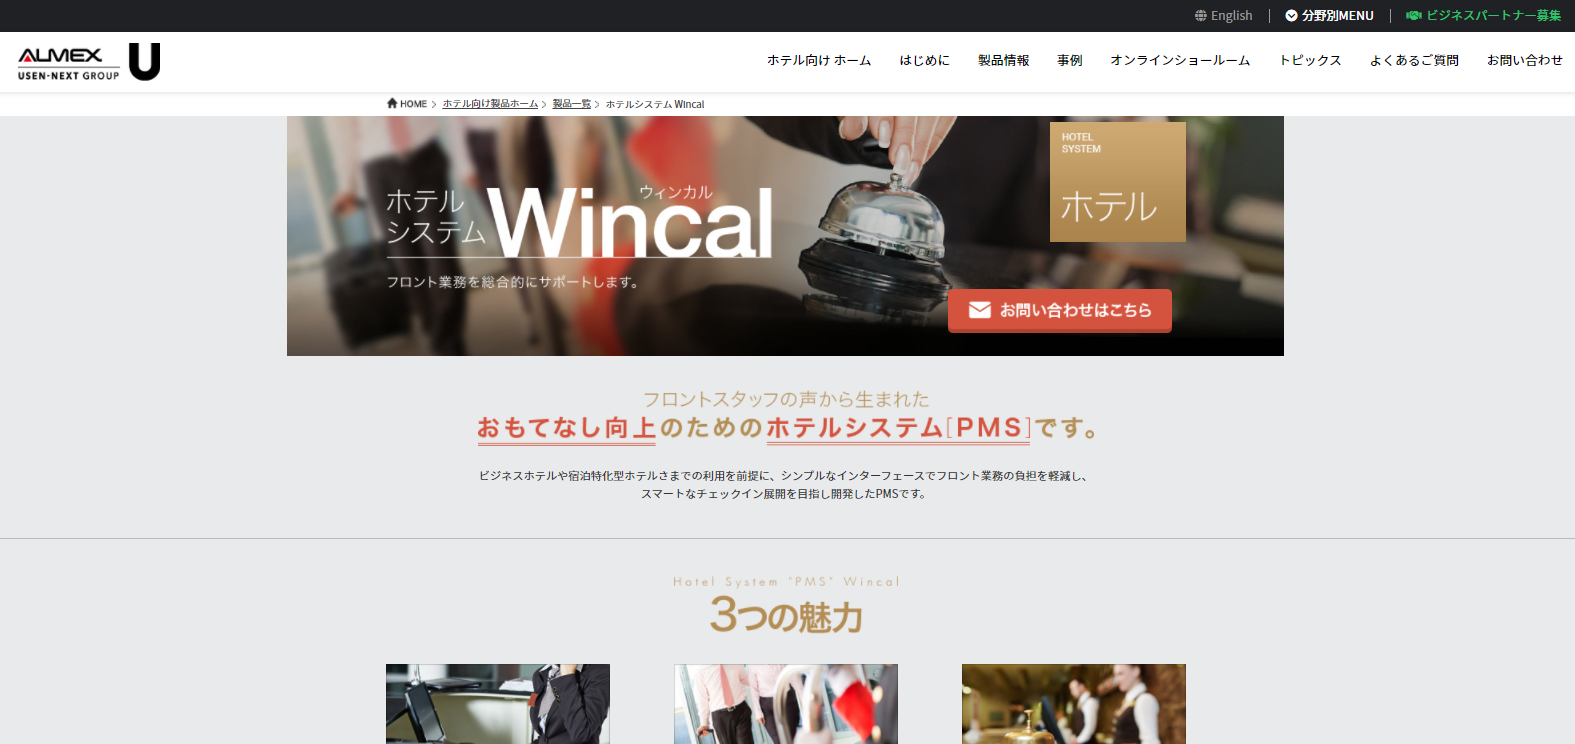 Wincal」について知る  日本最大級のホテル旅館情報サイト HOTELIER